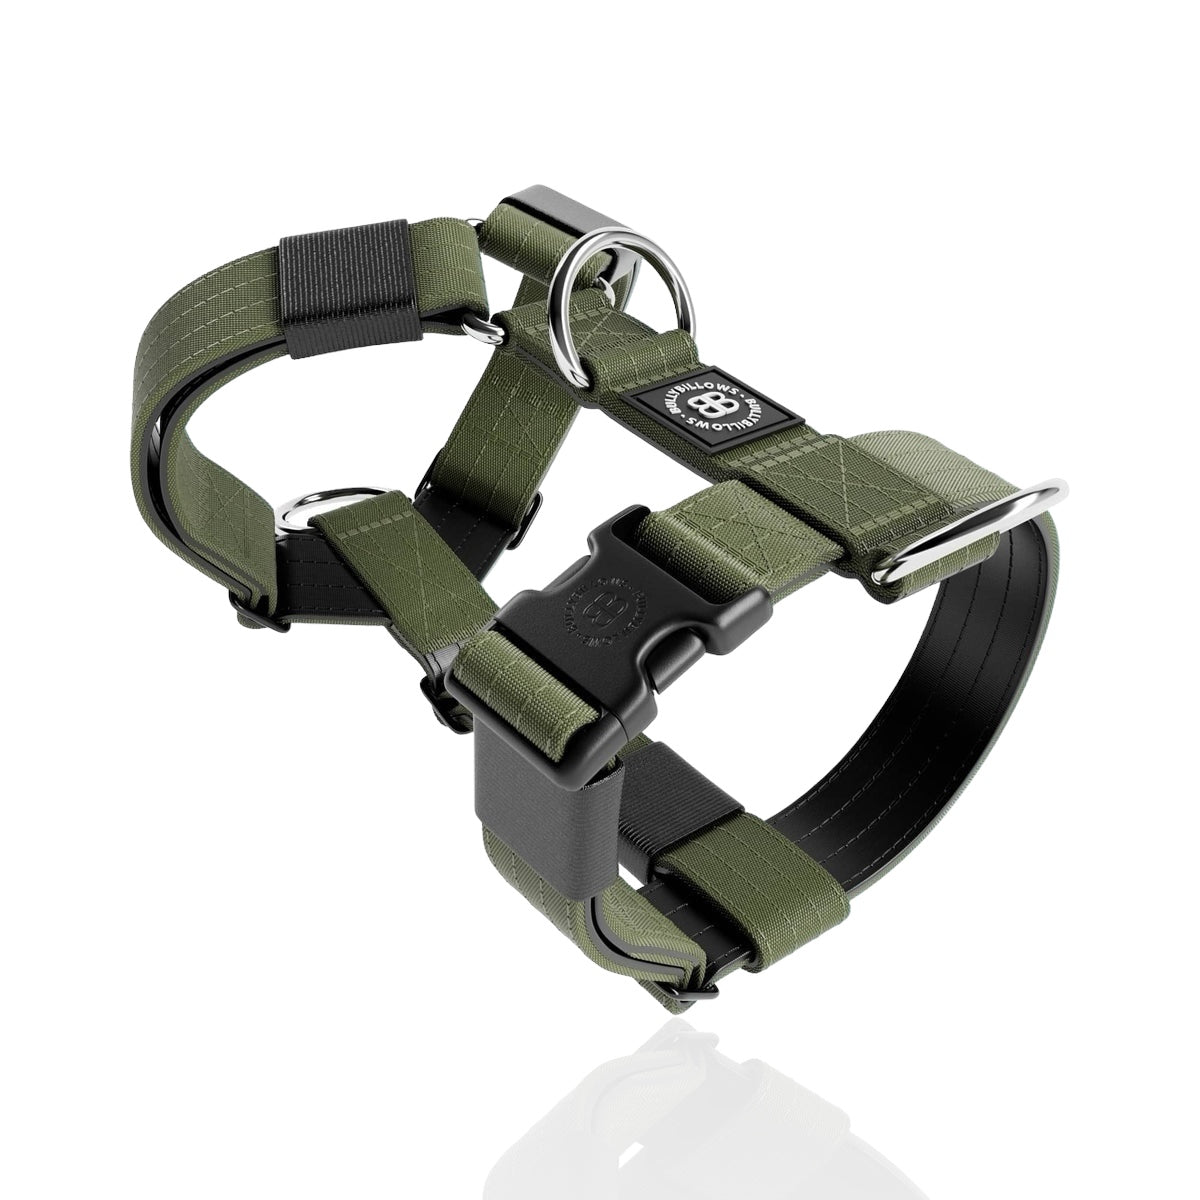 TRI-Harness® | Anti-Pull, Adjustable & Durable - Dog Trainers Choice - Khaki v2.0